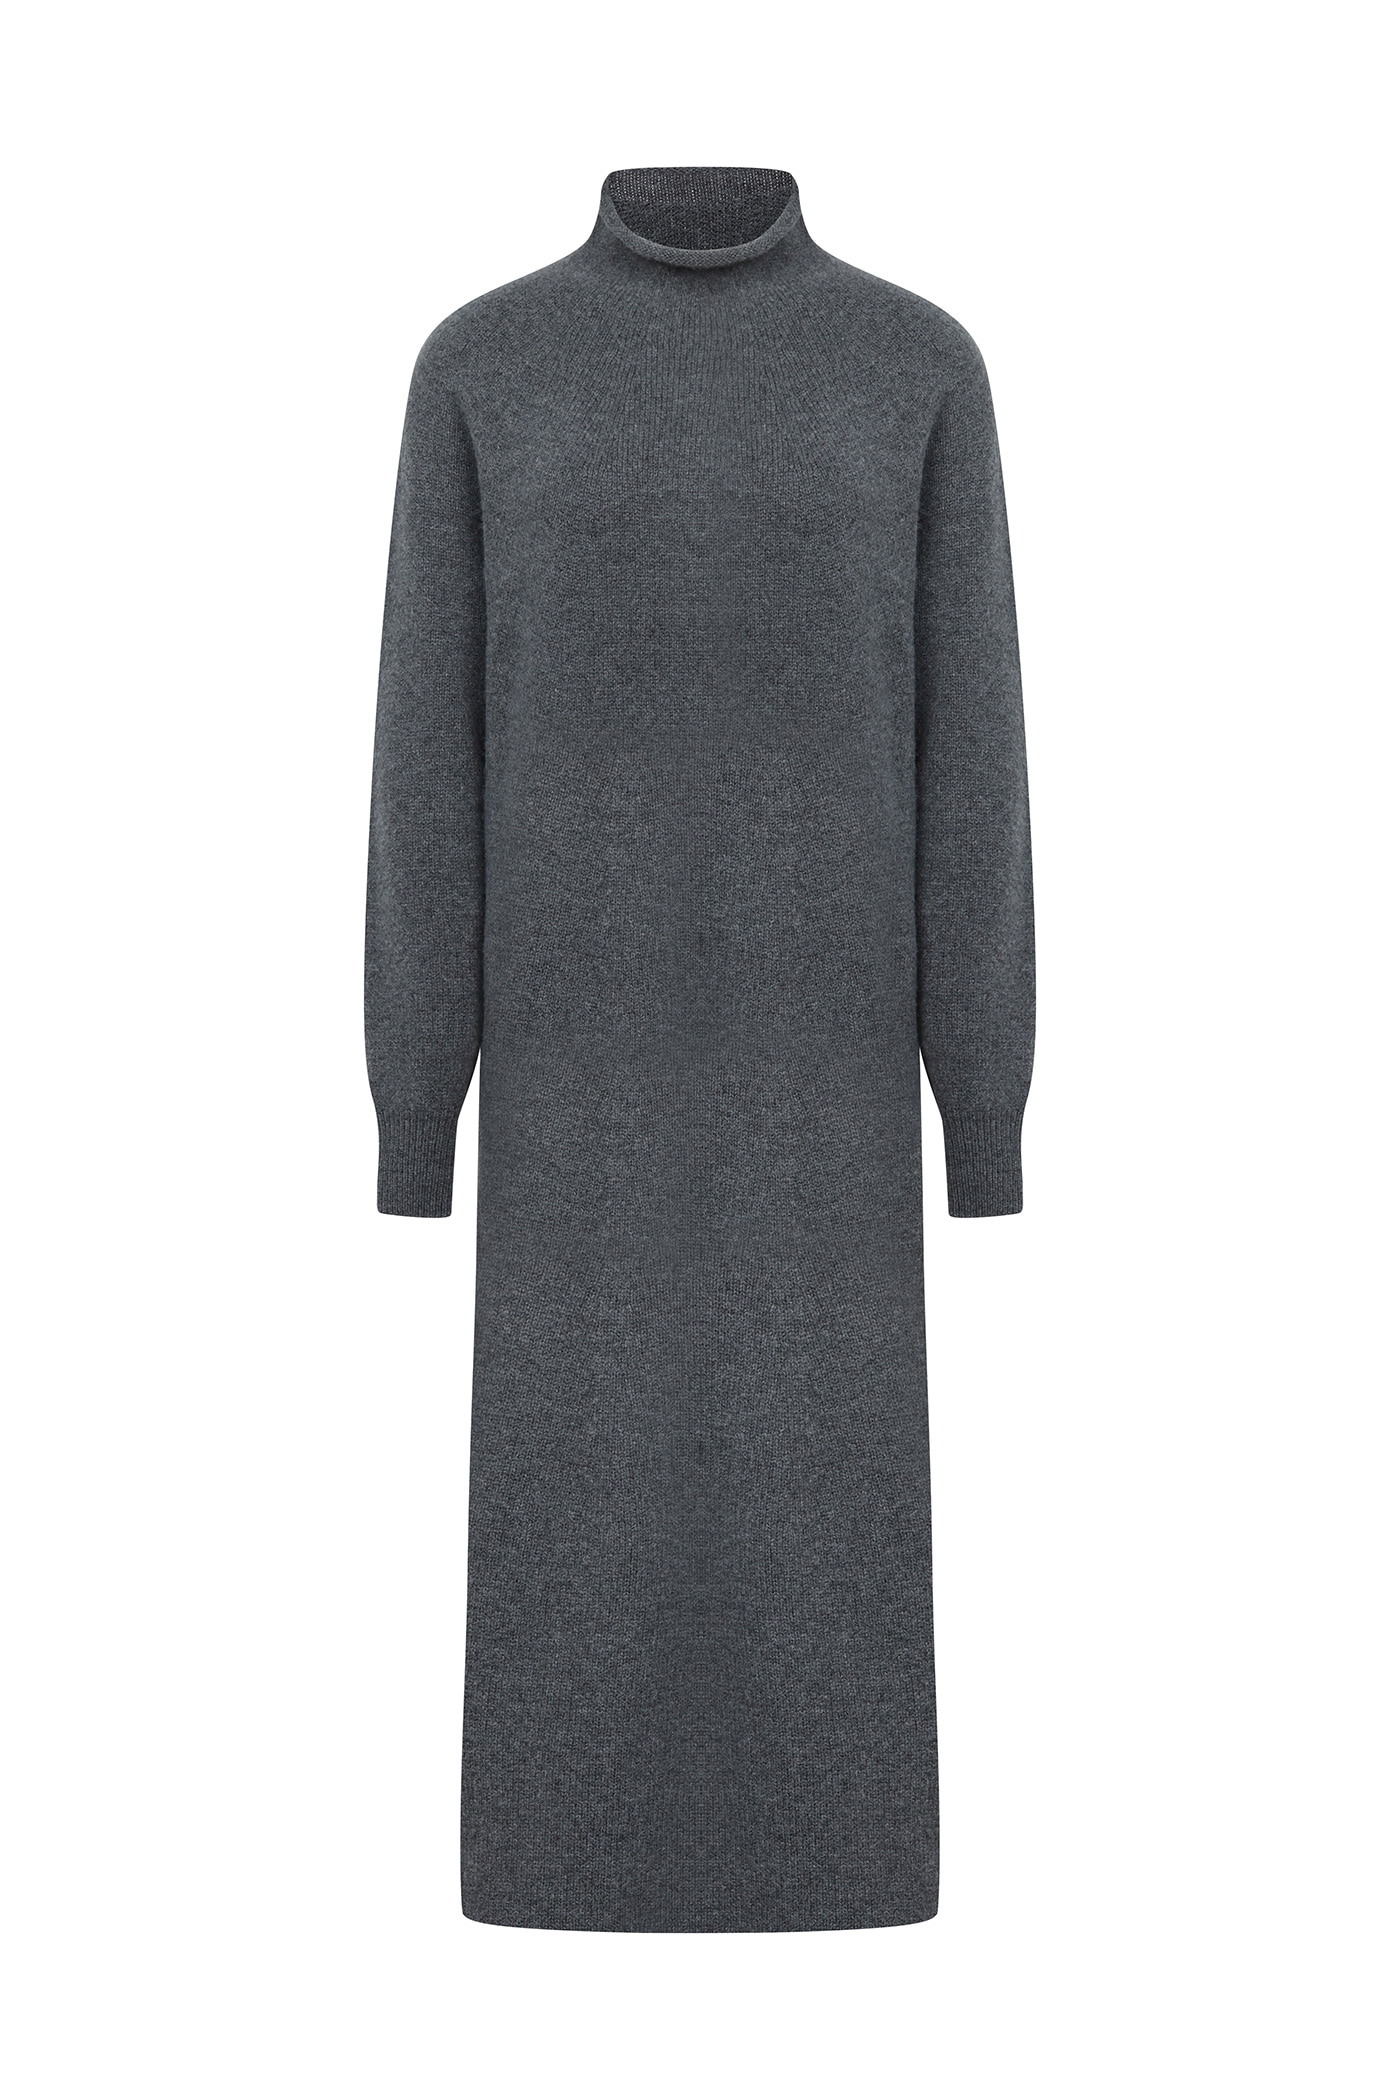 Merino Wool 100Wholegarment Knit Dress[LMBBWIKN159]-3color